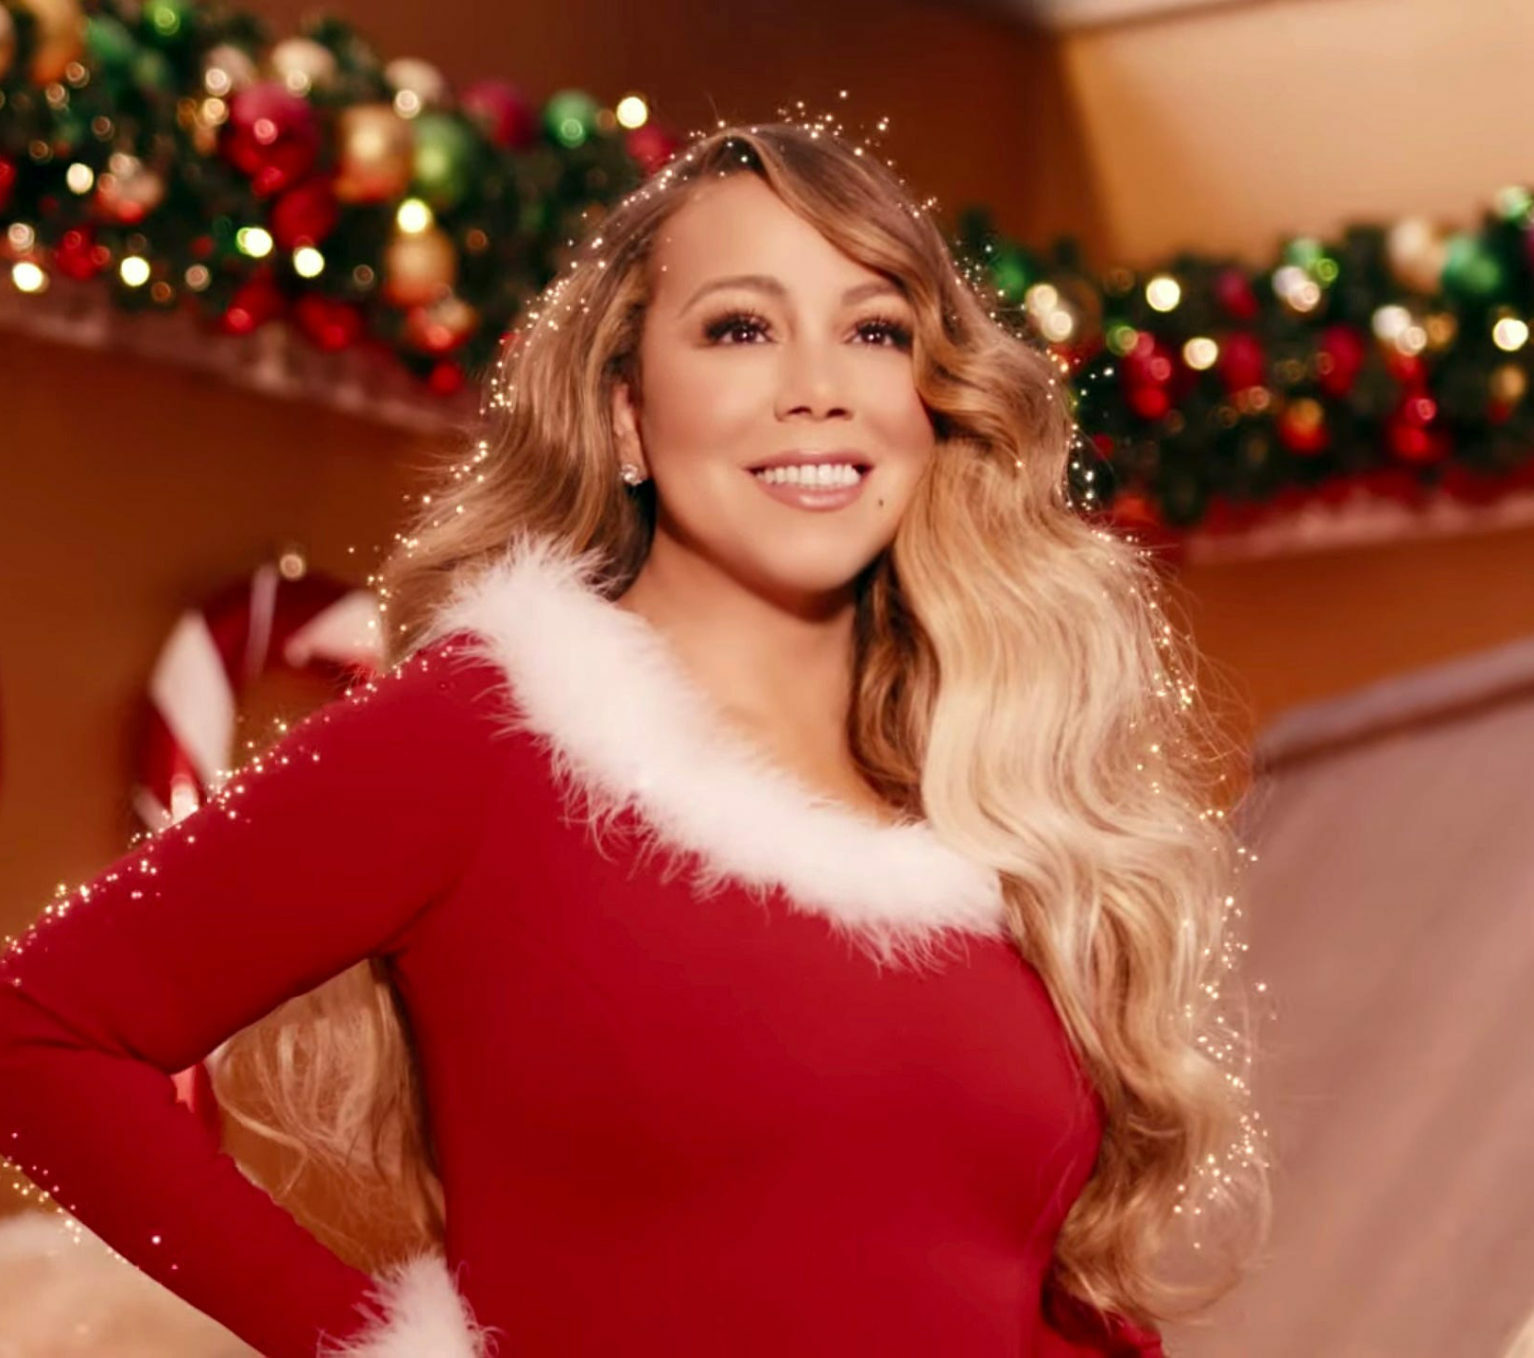 Клипы песни новый год. All i want for Christmas is you Мэрайя Кэри. Мэрайя Кэри Новогодняя. Mariah Carey Рождество. Мэрайя Кэри Рождество.